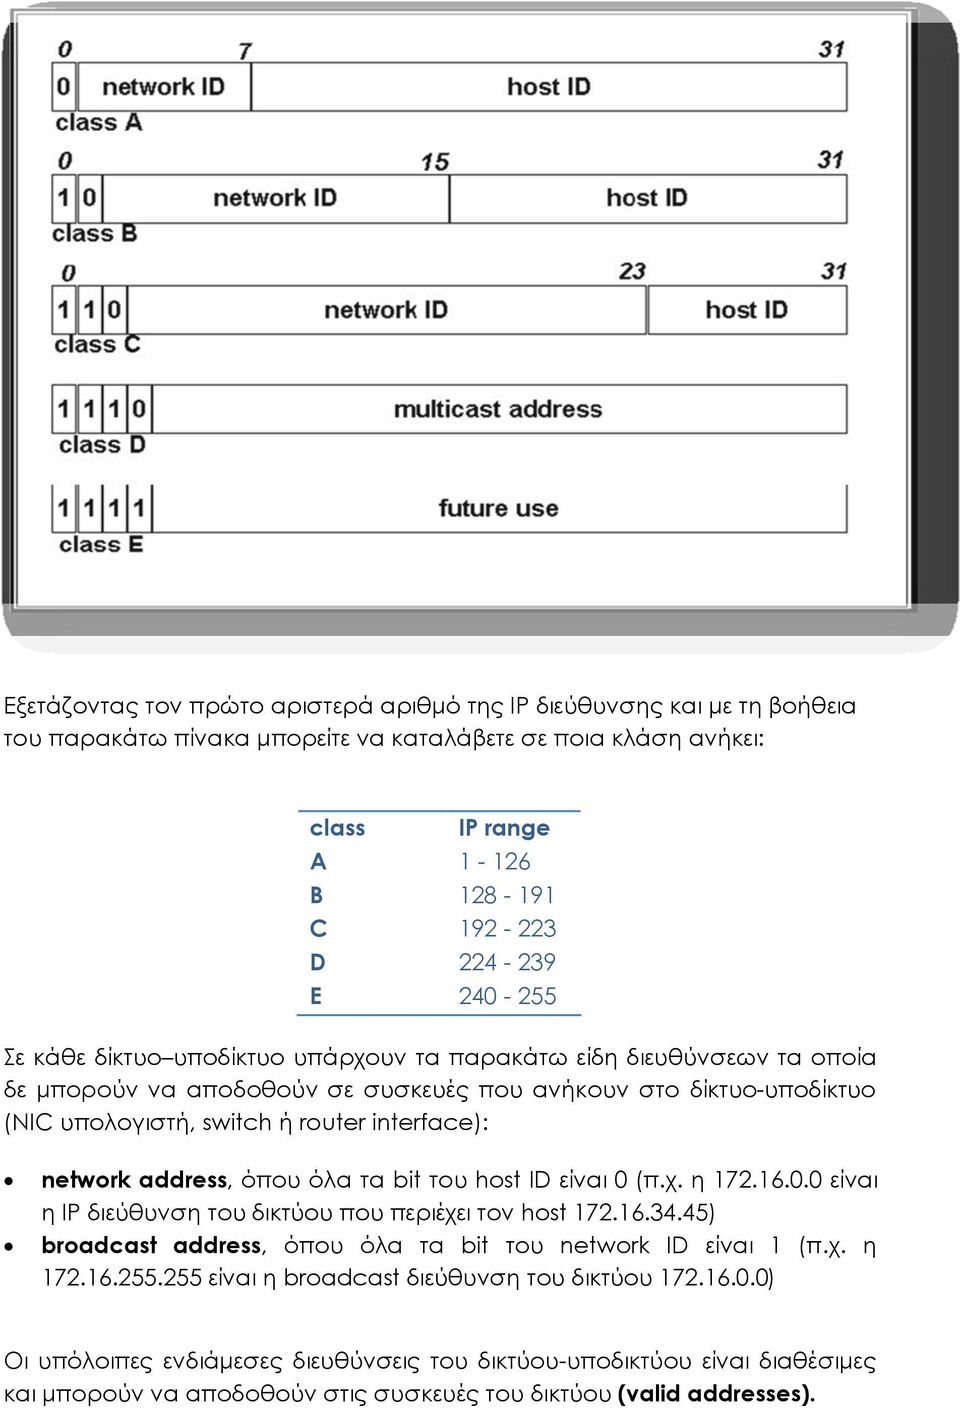 network address, όπου όλα τα bit του host ID είναι 0 (π.χ. η 172.16.0.0 είναι η ΙΡ διεύθυνση του δικτύου που περιέχει τον host 172.16.34.